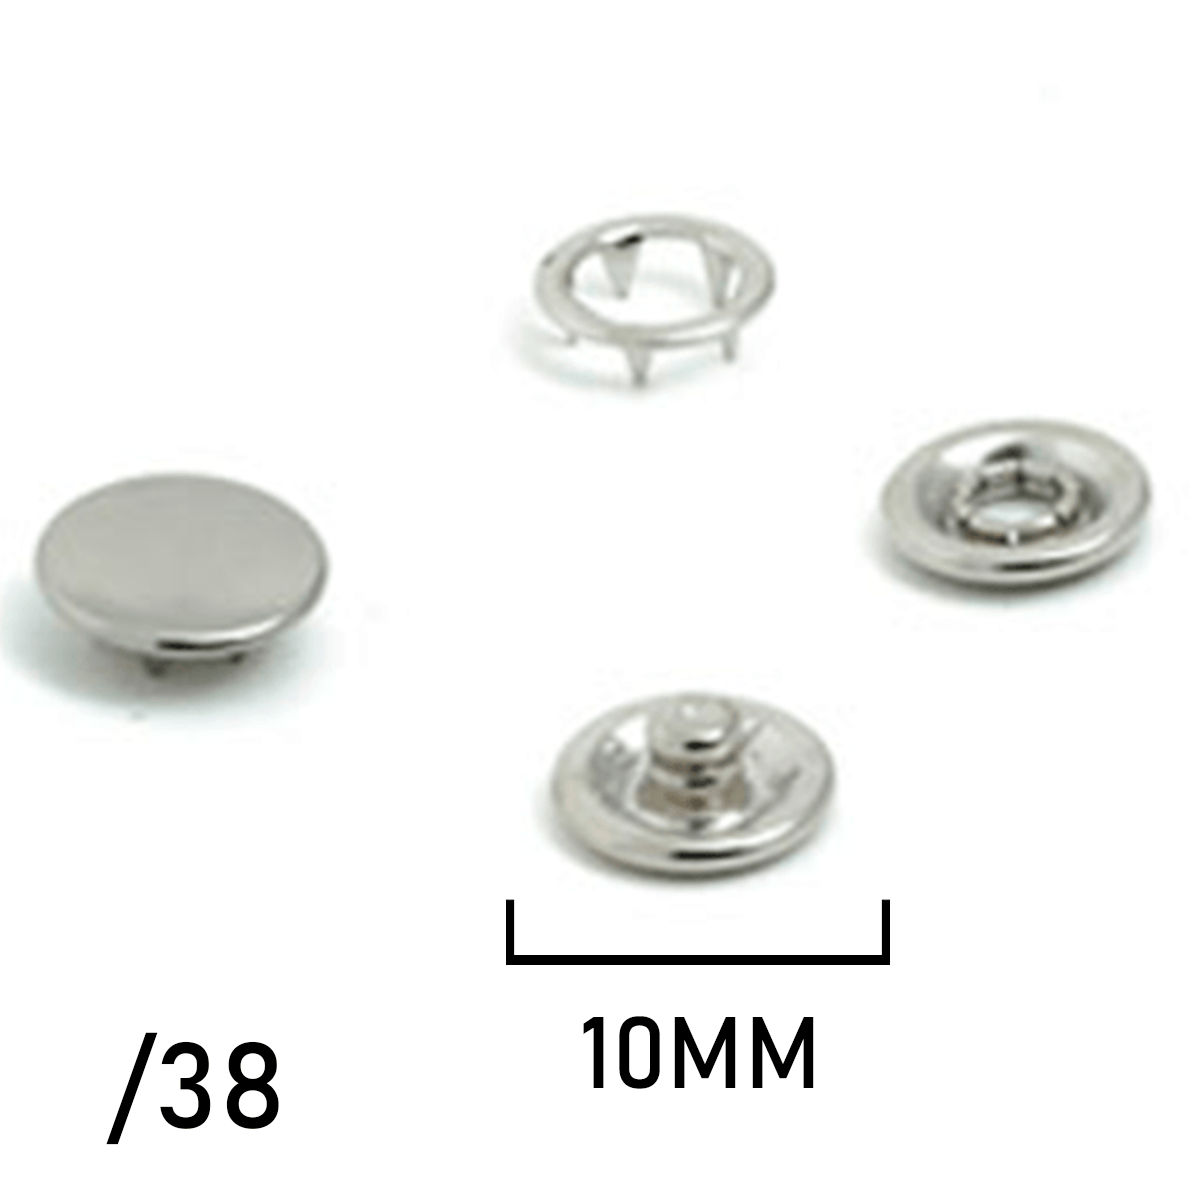 Botão de Pressão - Eberle - Latão - 10mm - C/200und - Ref: 115/38 EE - Cód: BT7.115.38.EE.L